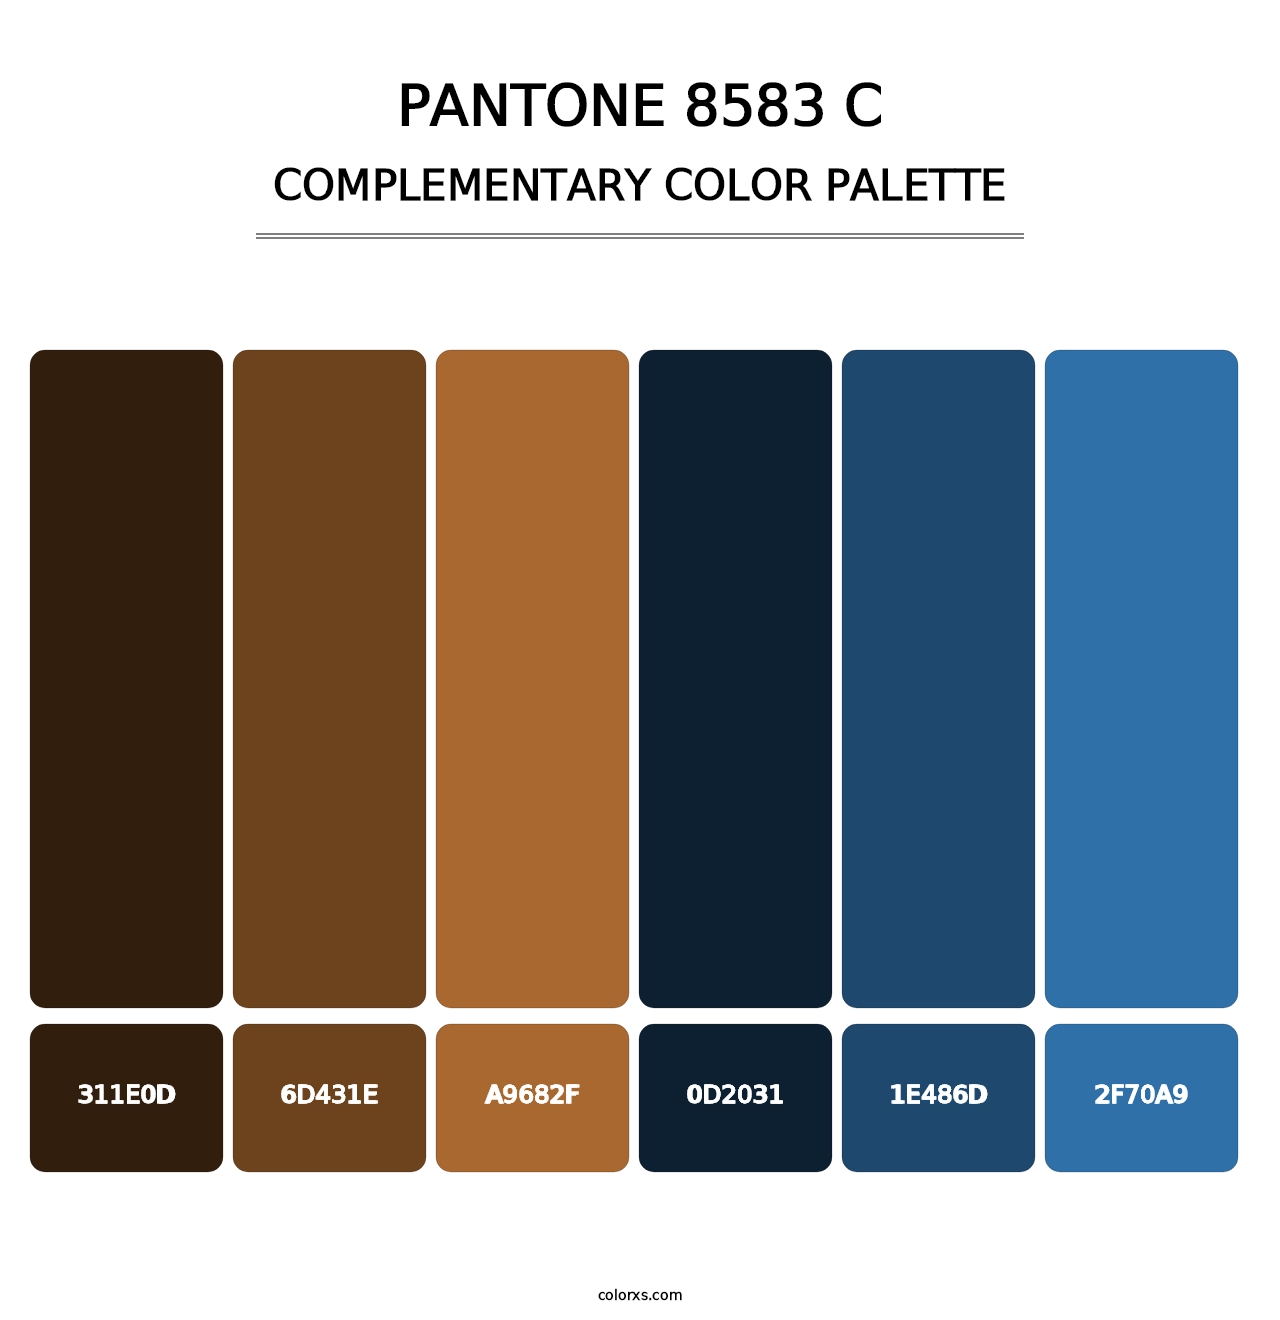 PANTONE 8583 C - Complementary Color Palette